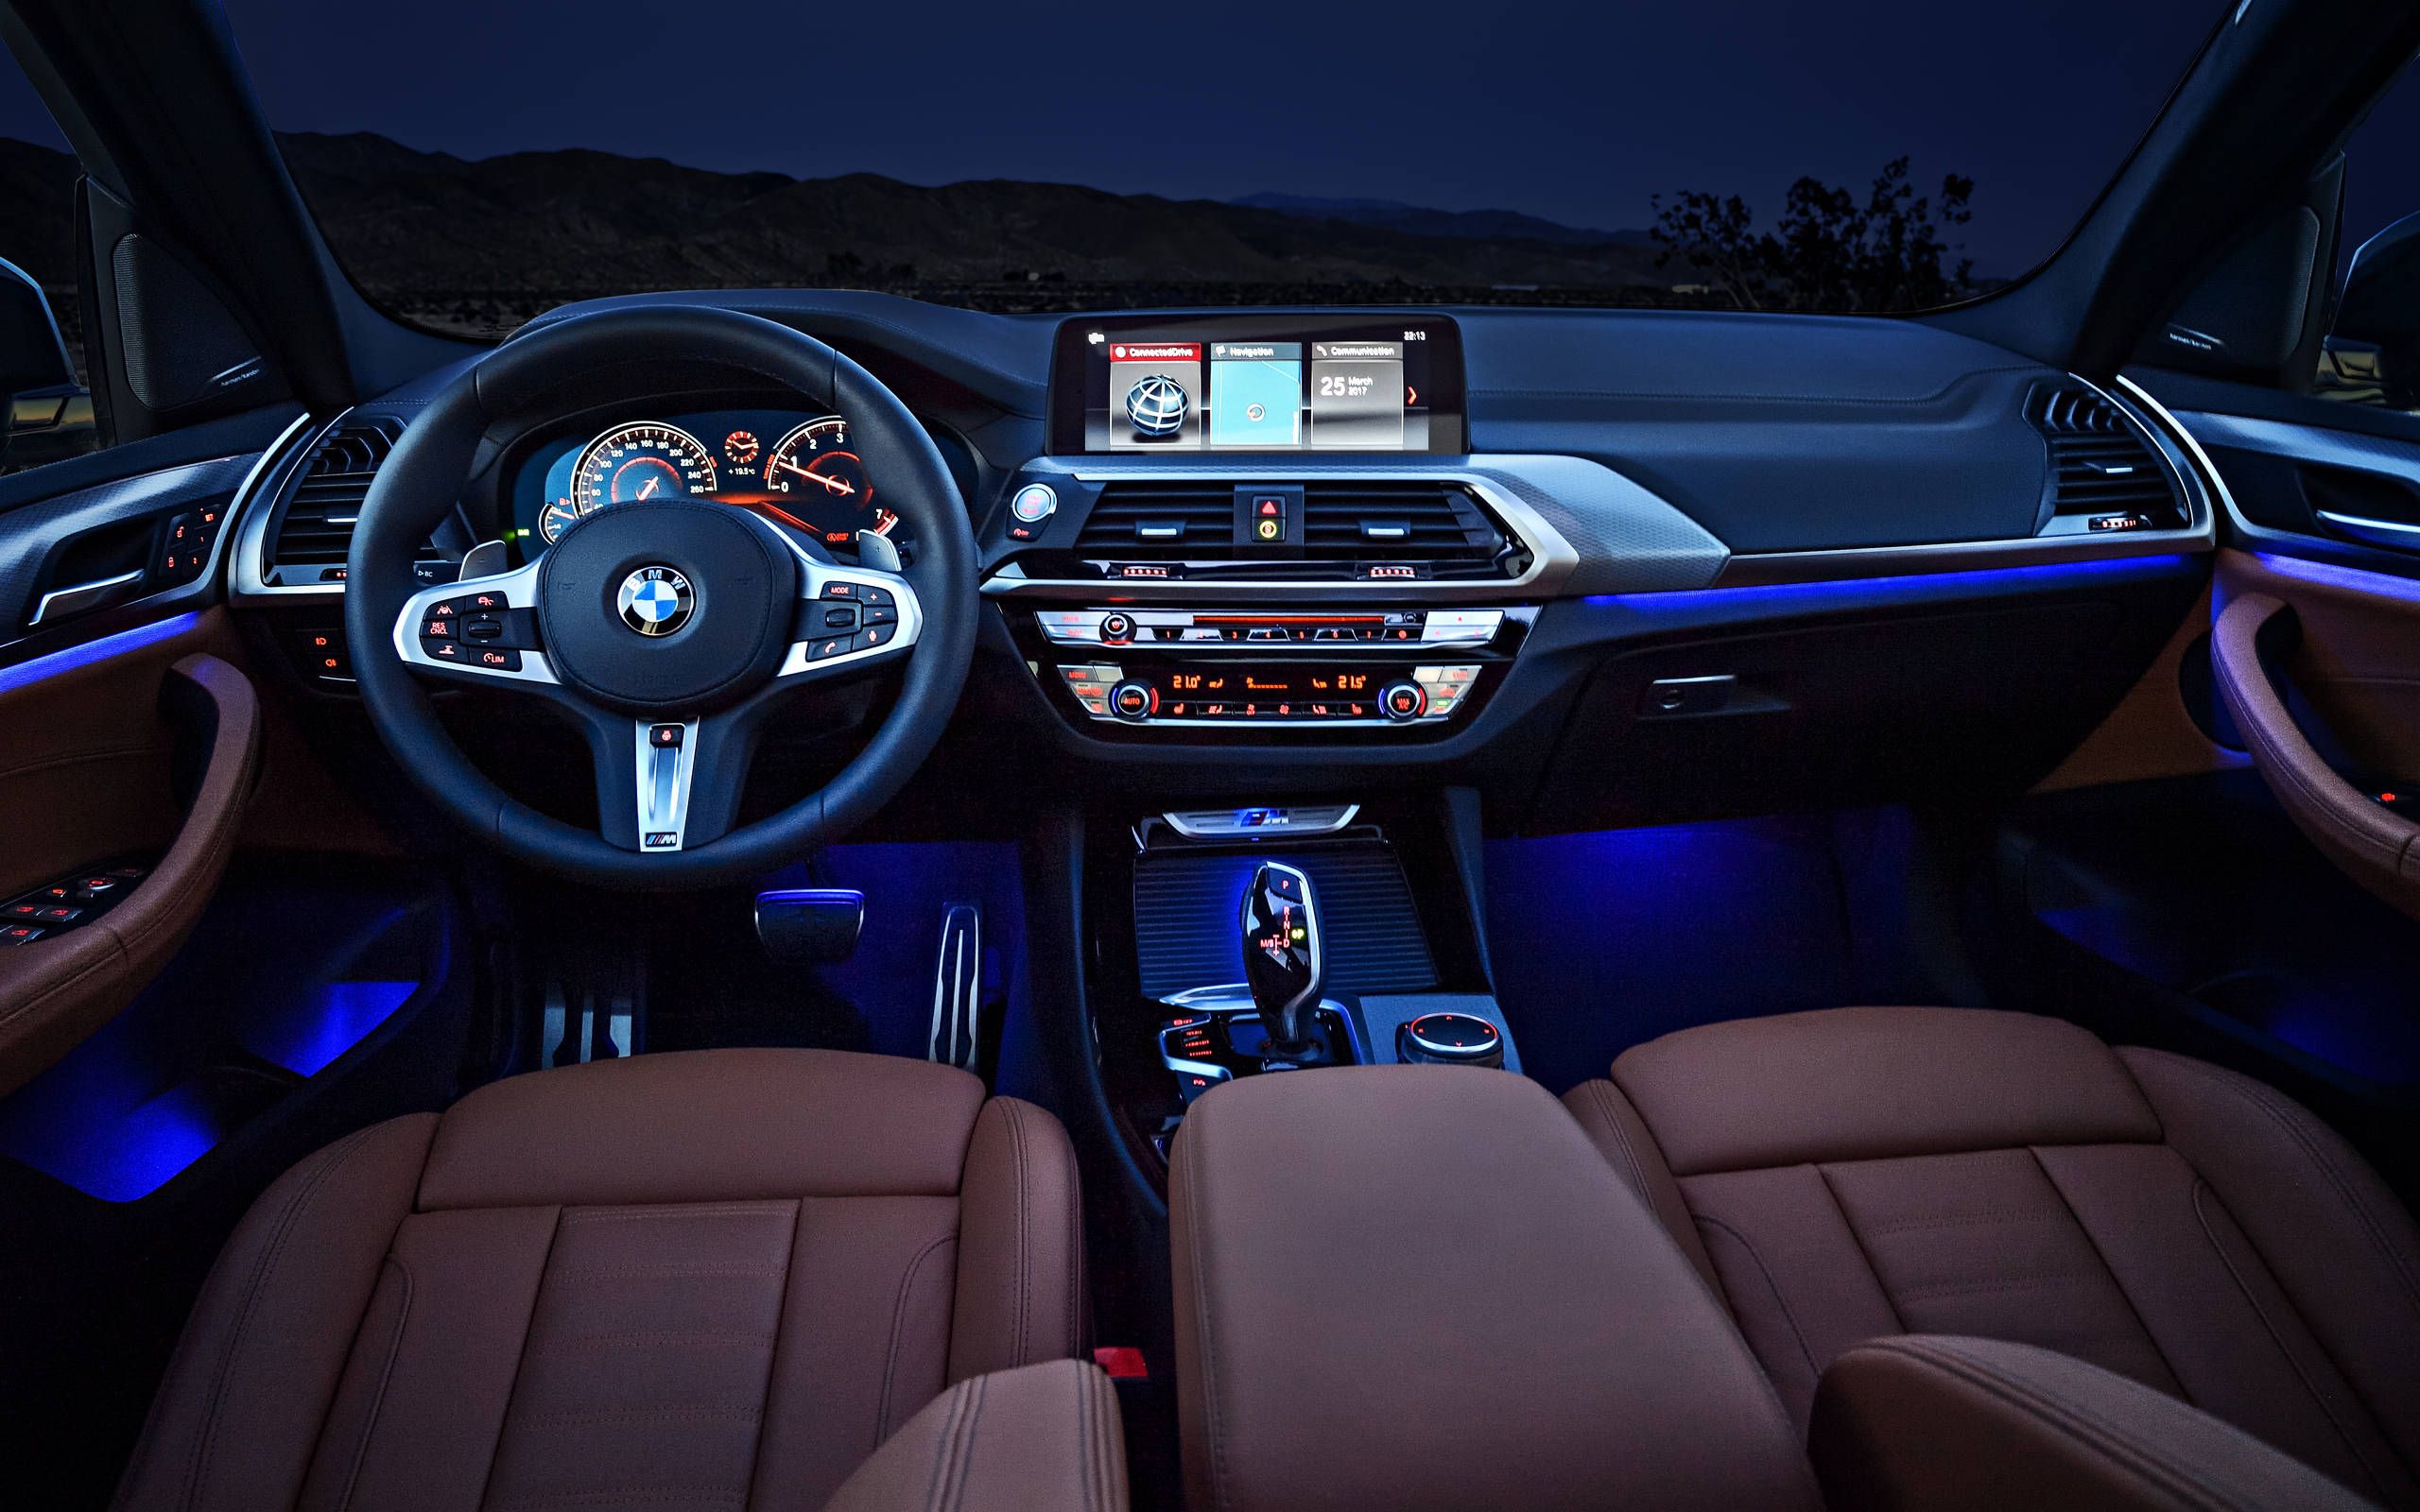 Gallery: 2018 BMW X3 interior